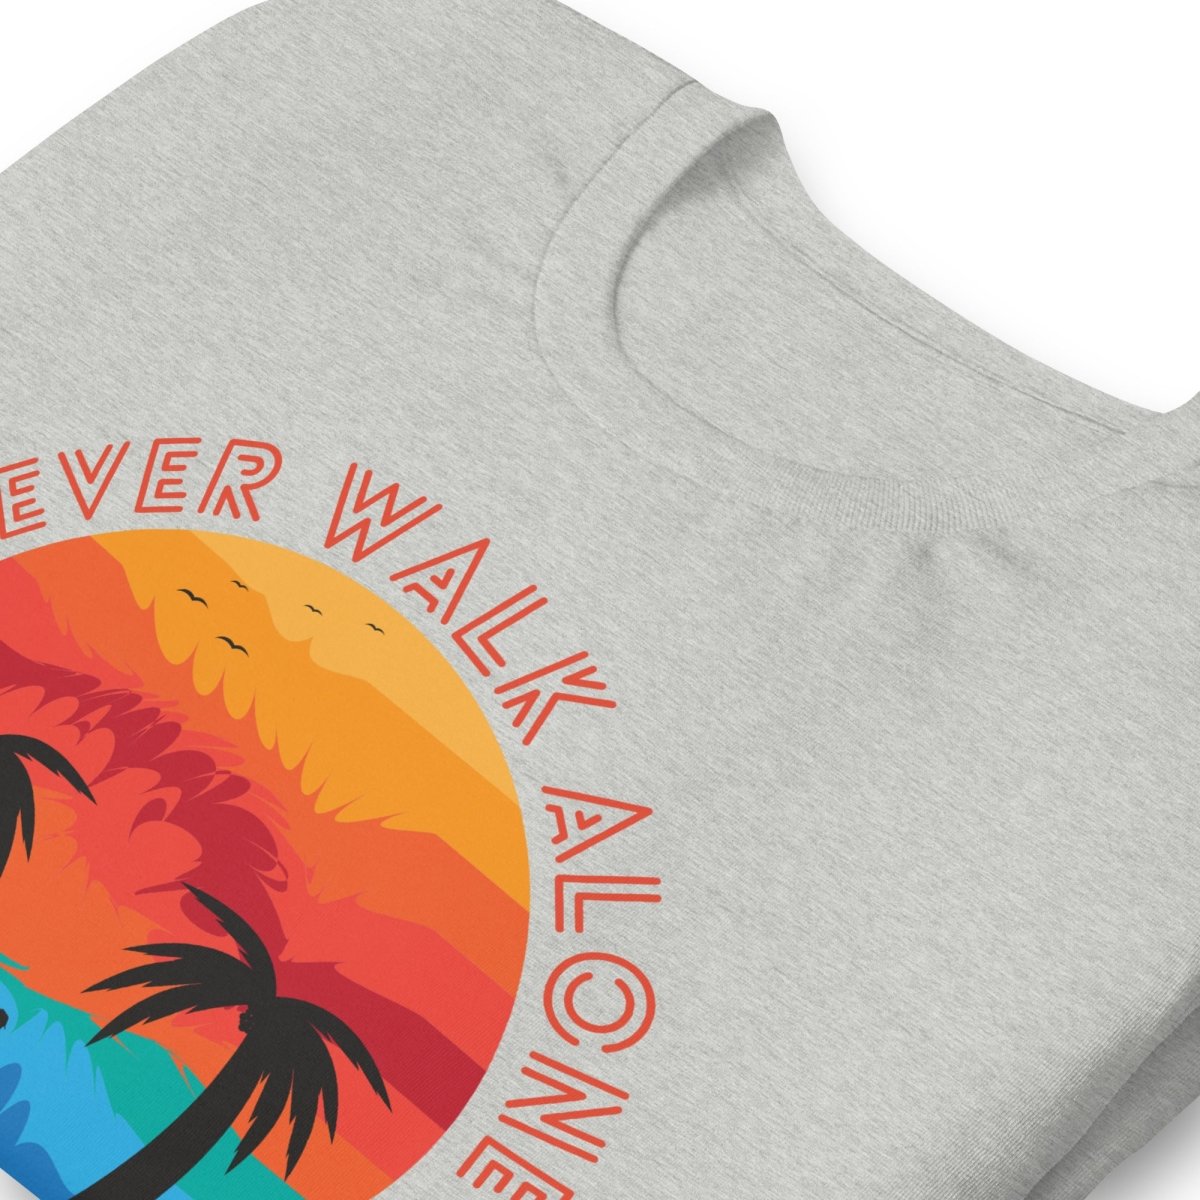 I Never Walk Alone T-Shirt - DoggyLoveandMore